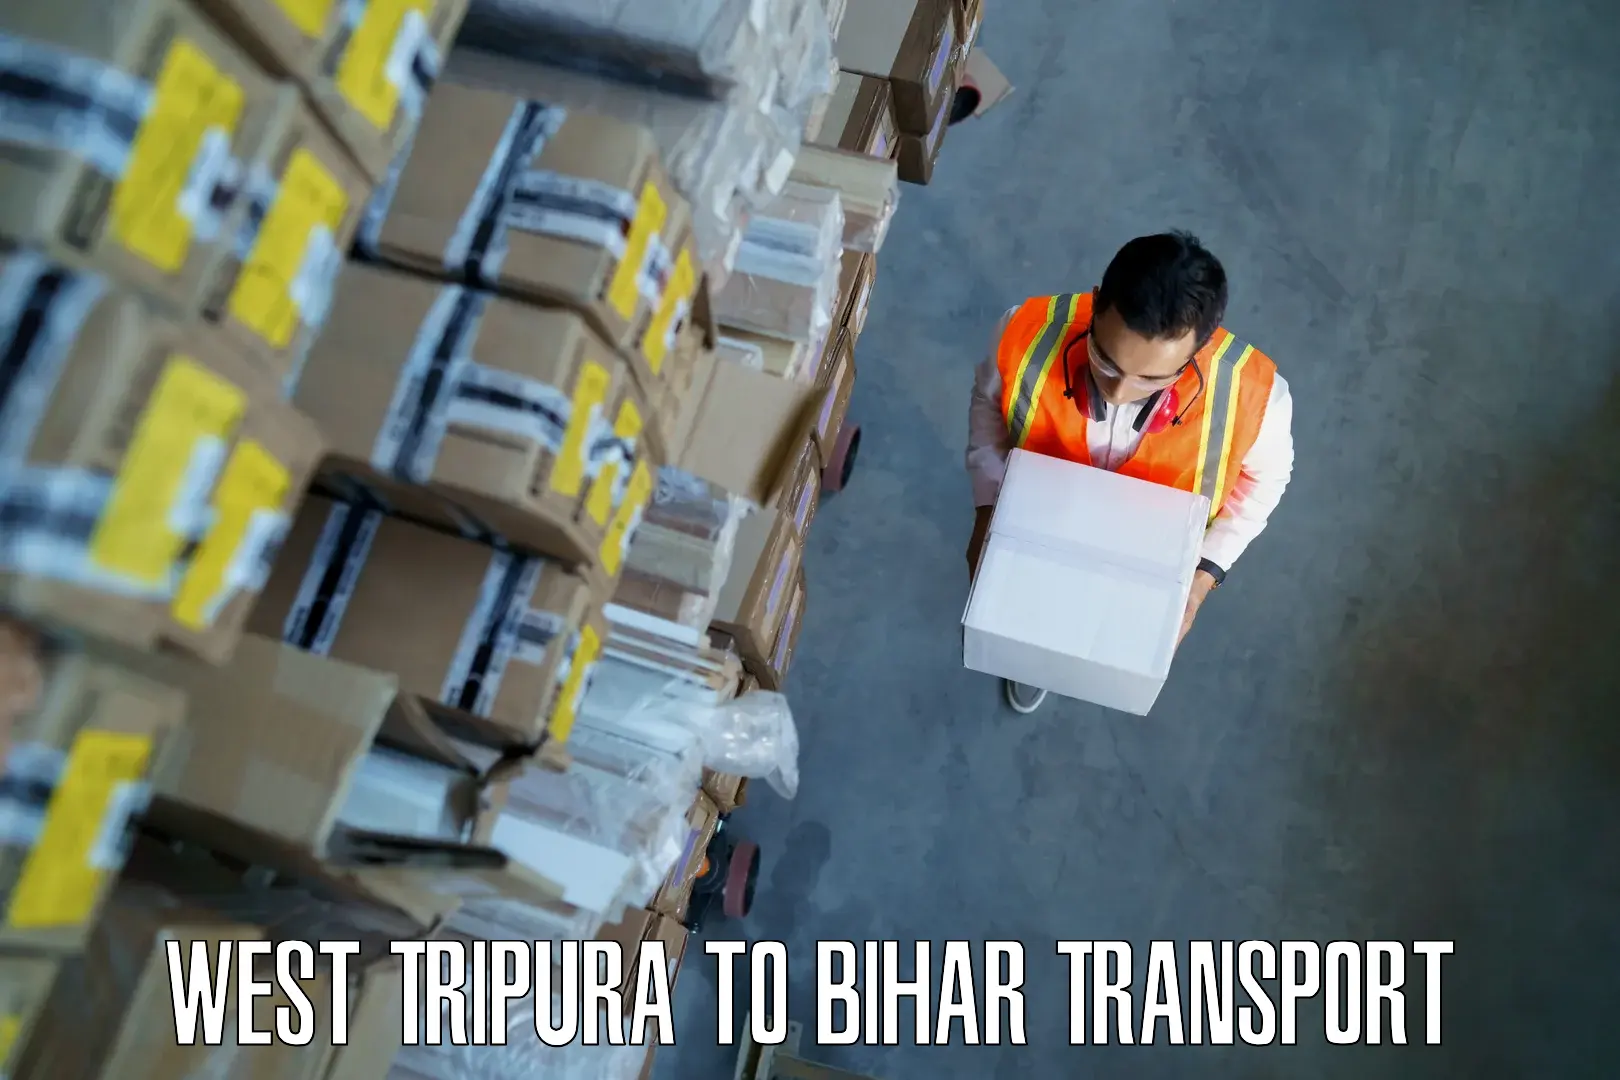 Bike shipping service West Tripura to Bihar